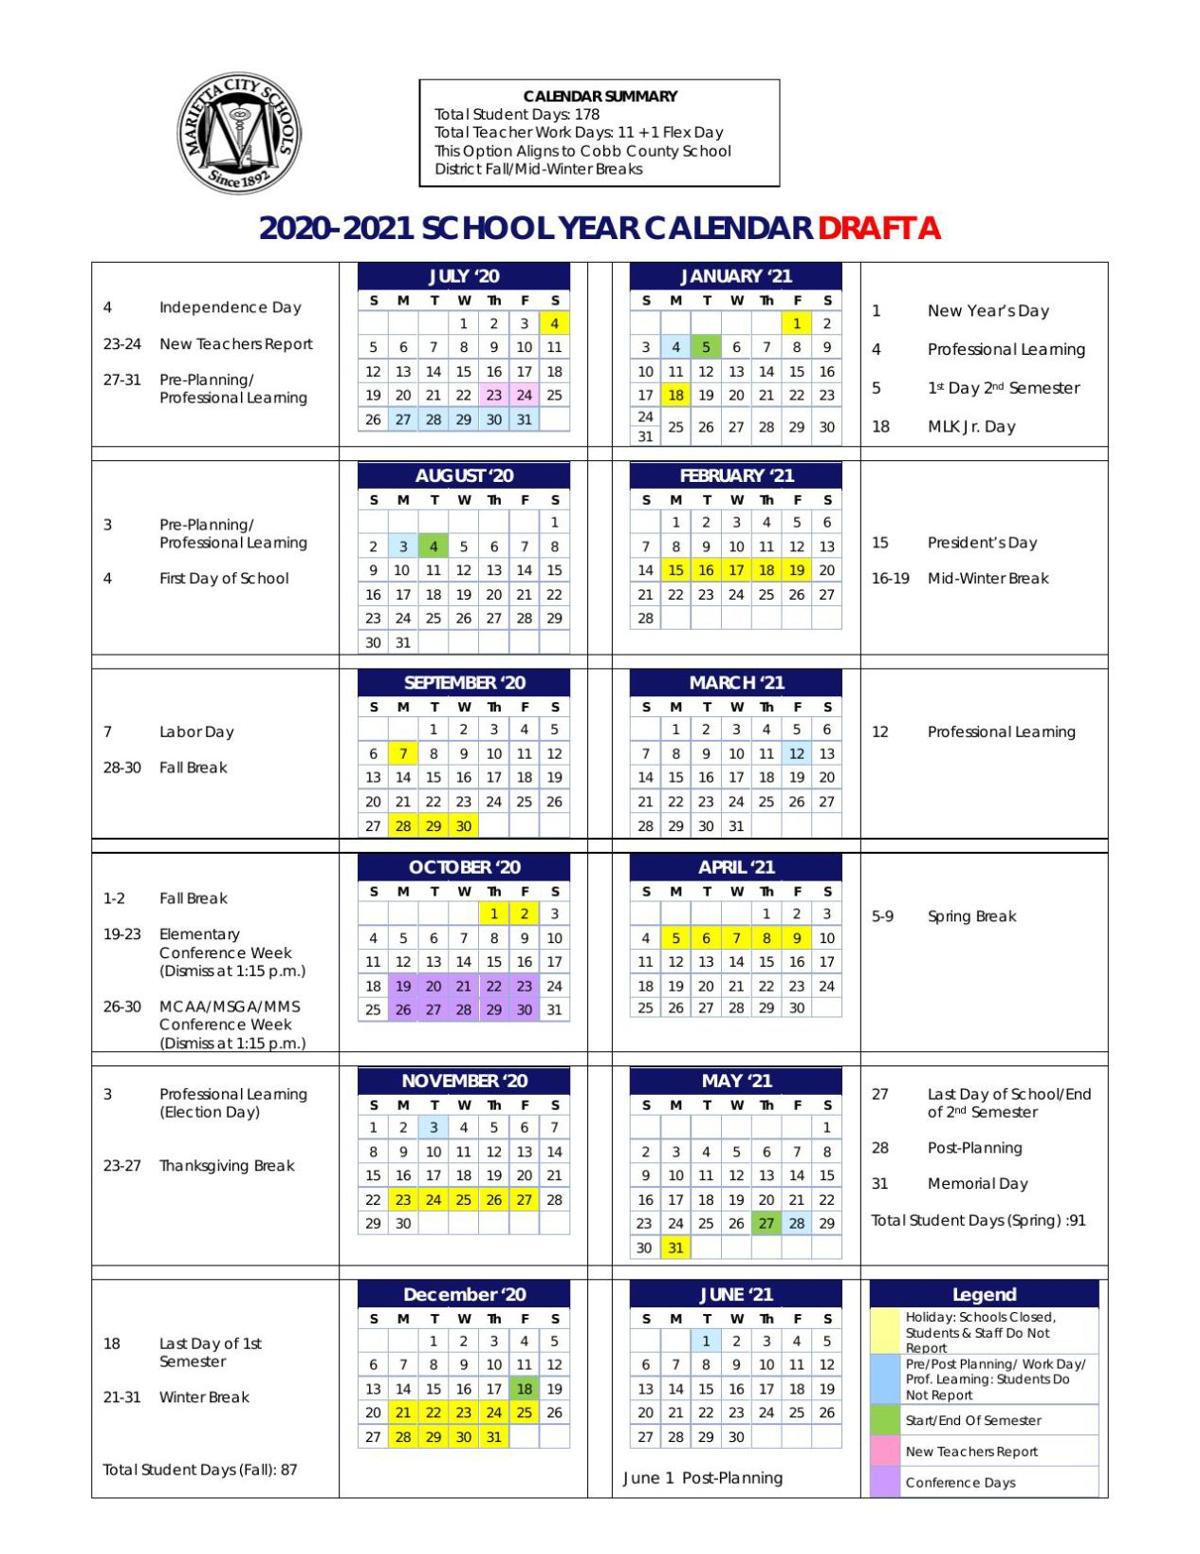 Marietta school board to consider next two years' calendars News